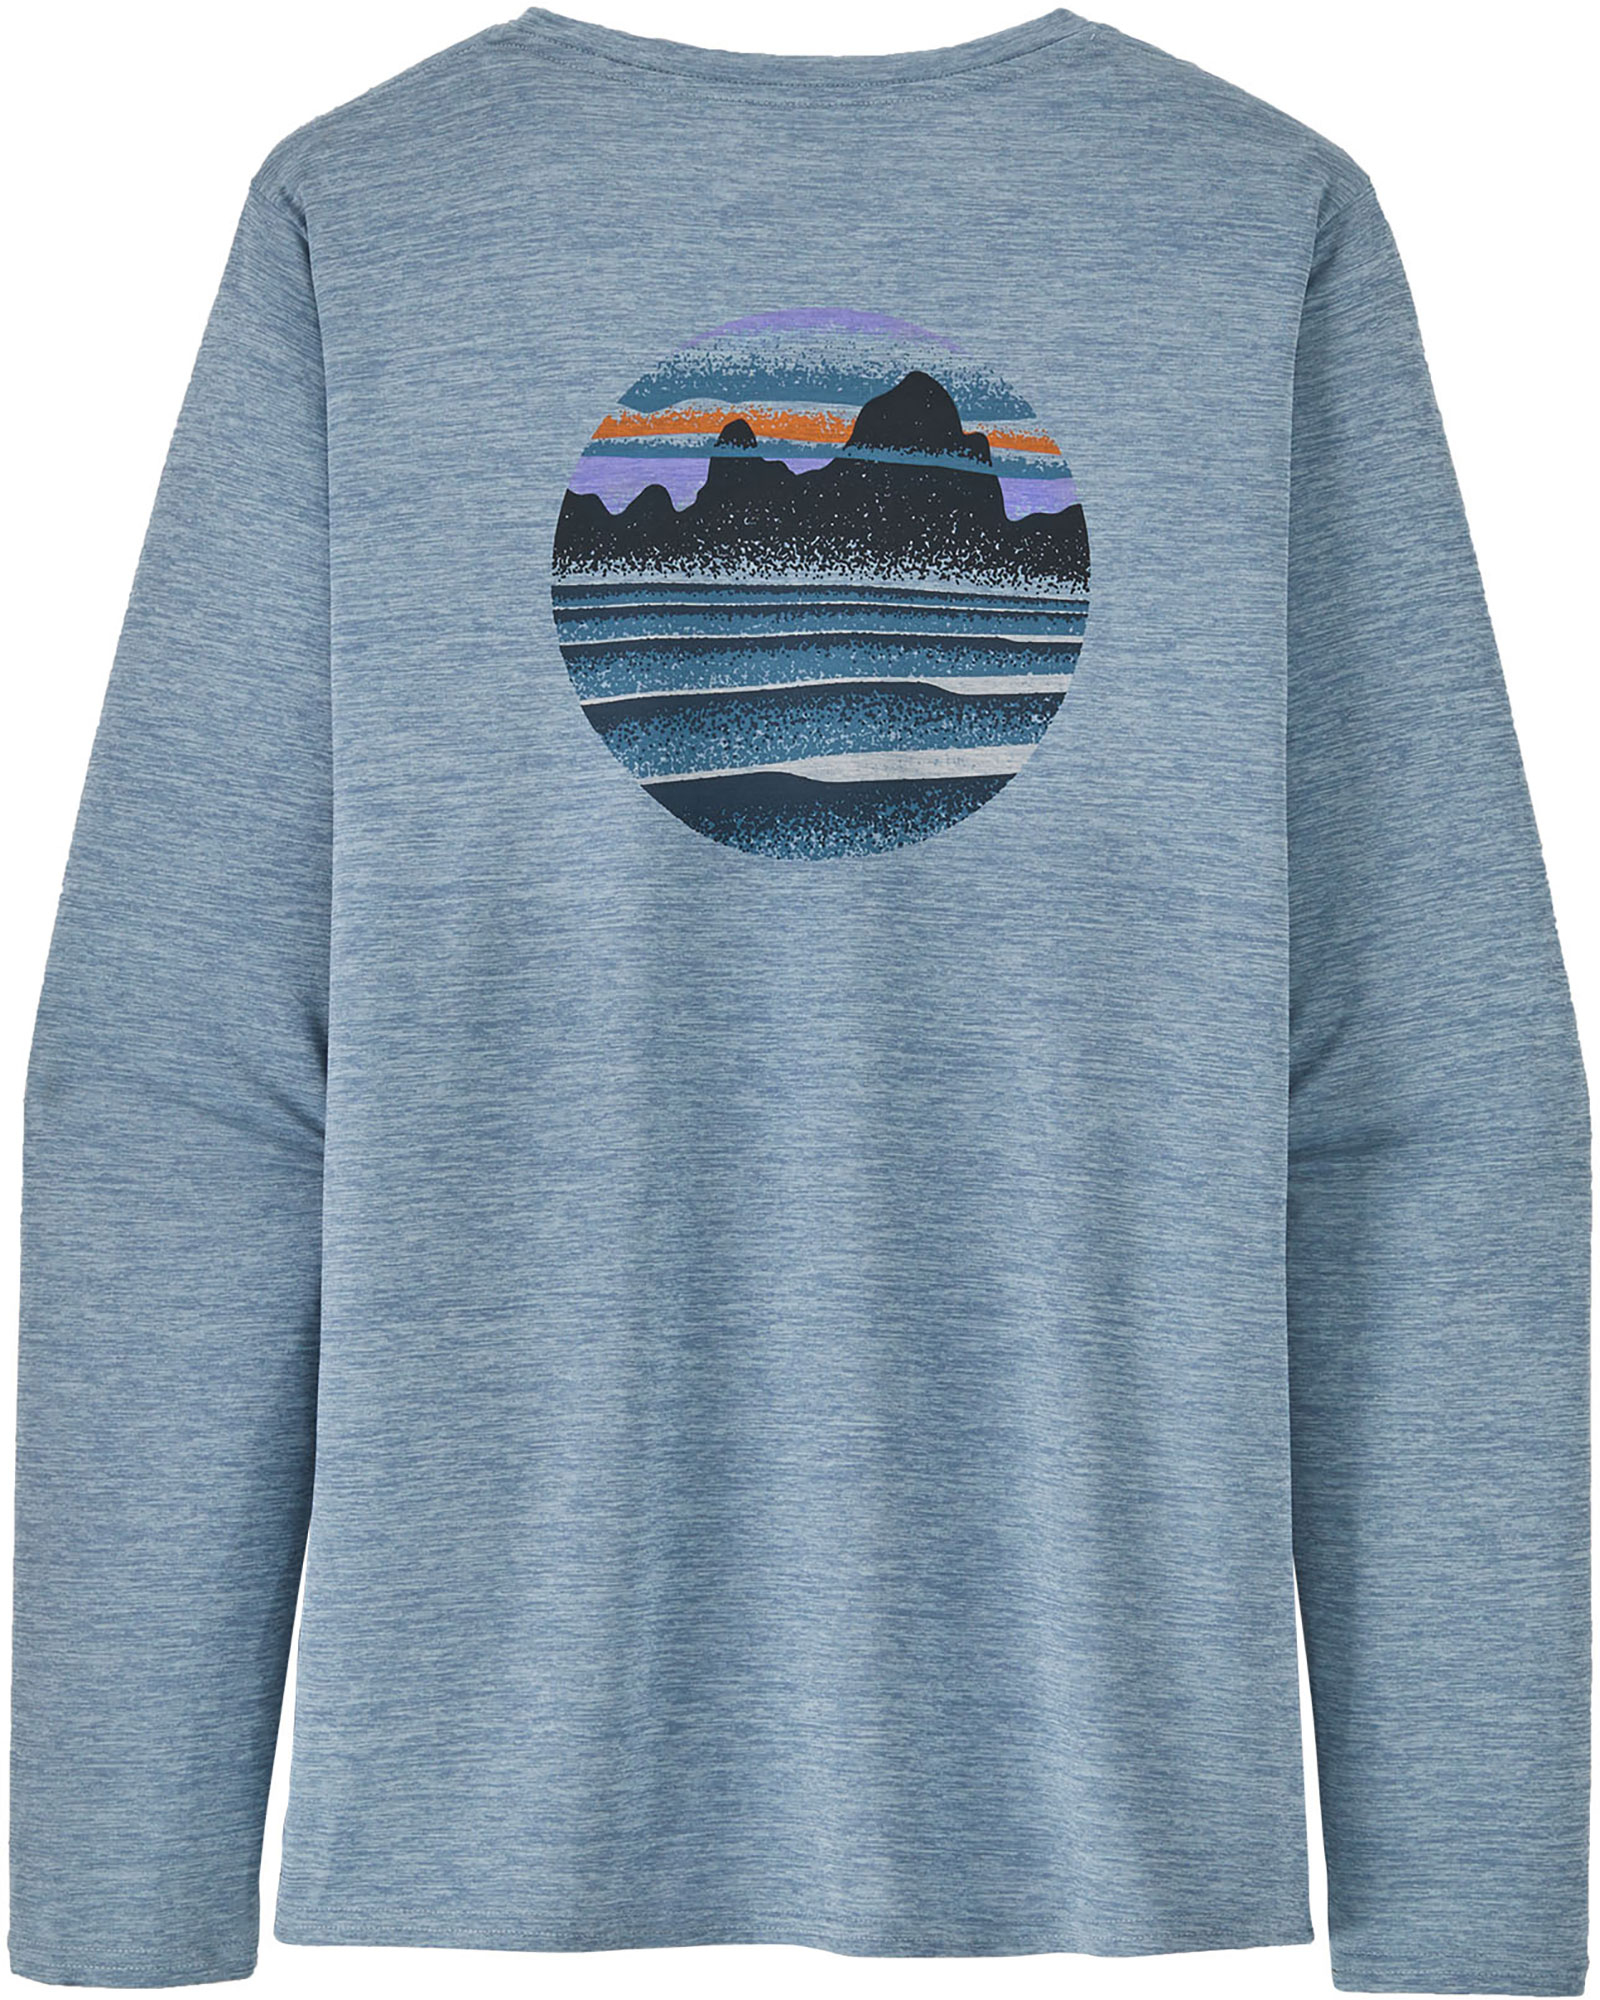 Patagonia Long Sleeve Capilene Cool Daily Graphic Women’s T Shirt - Steam Blue X-Dye/ Skyline Stencil L